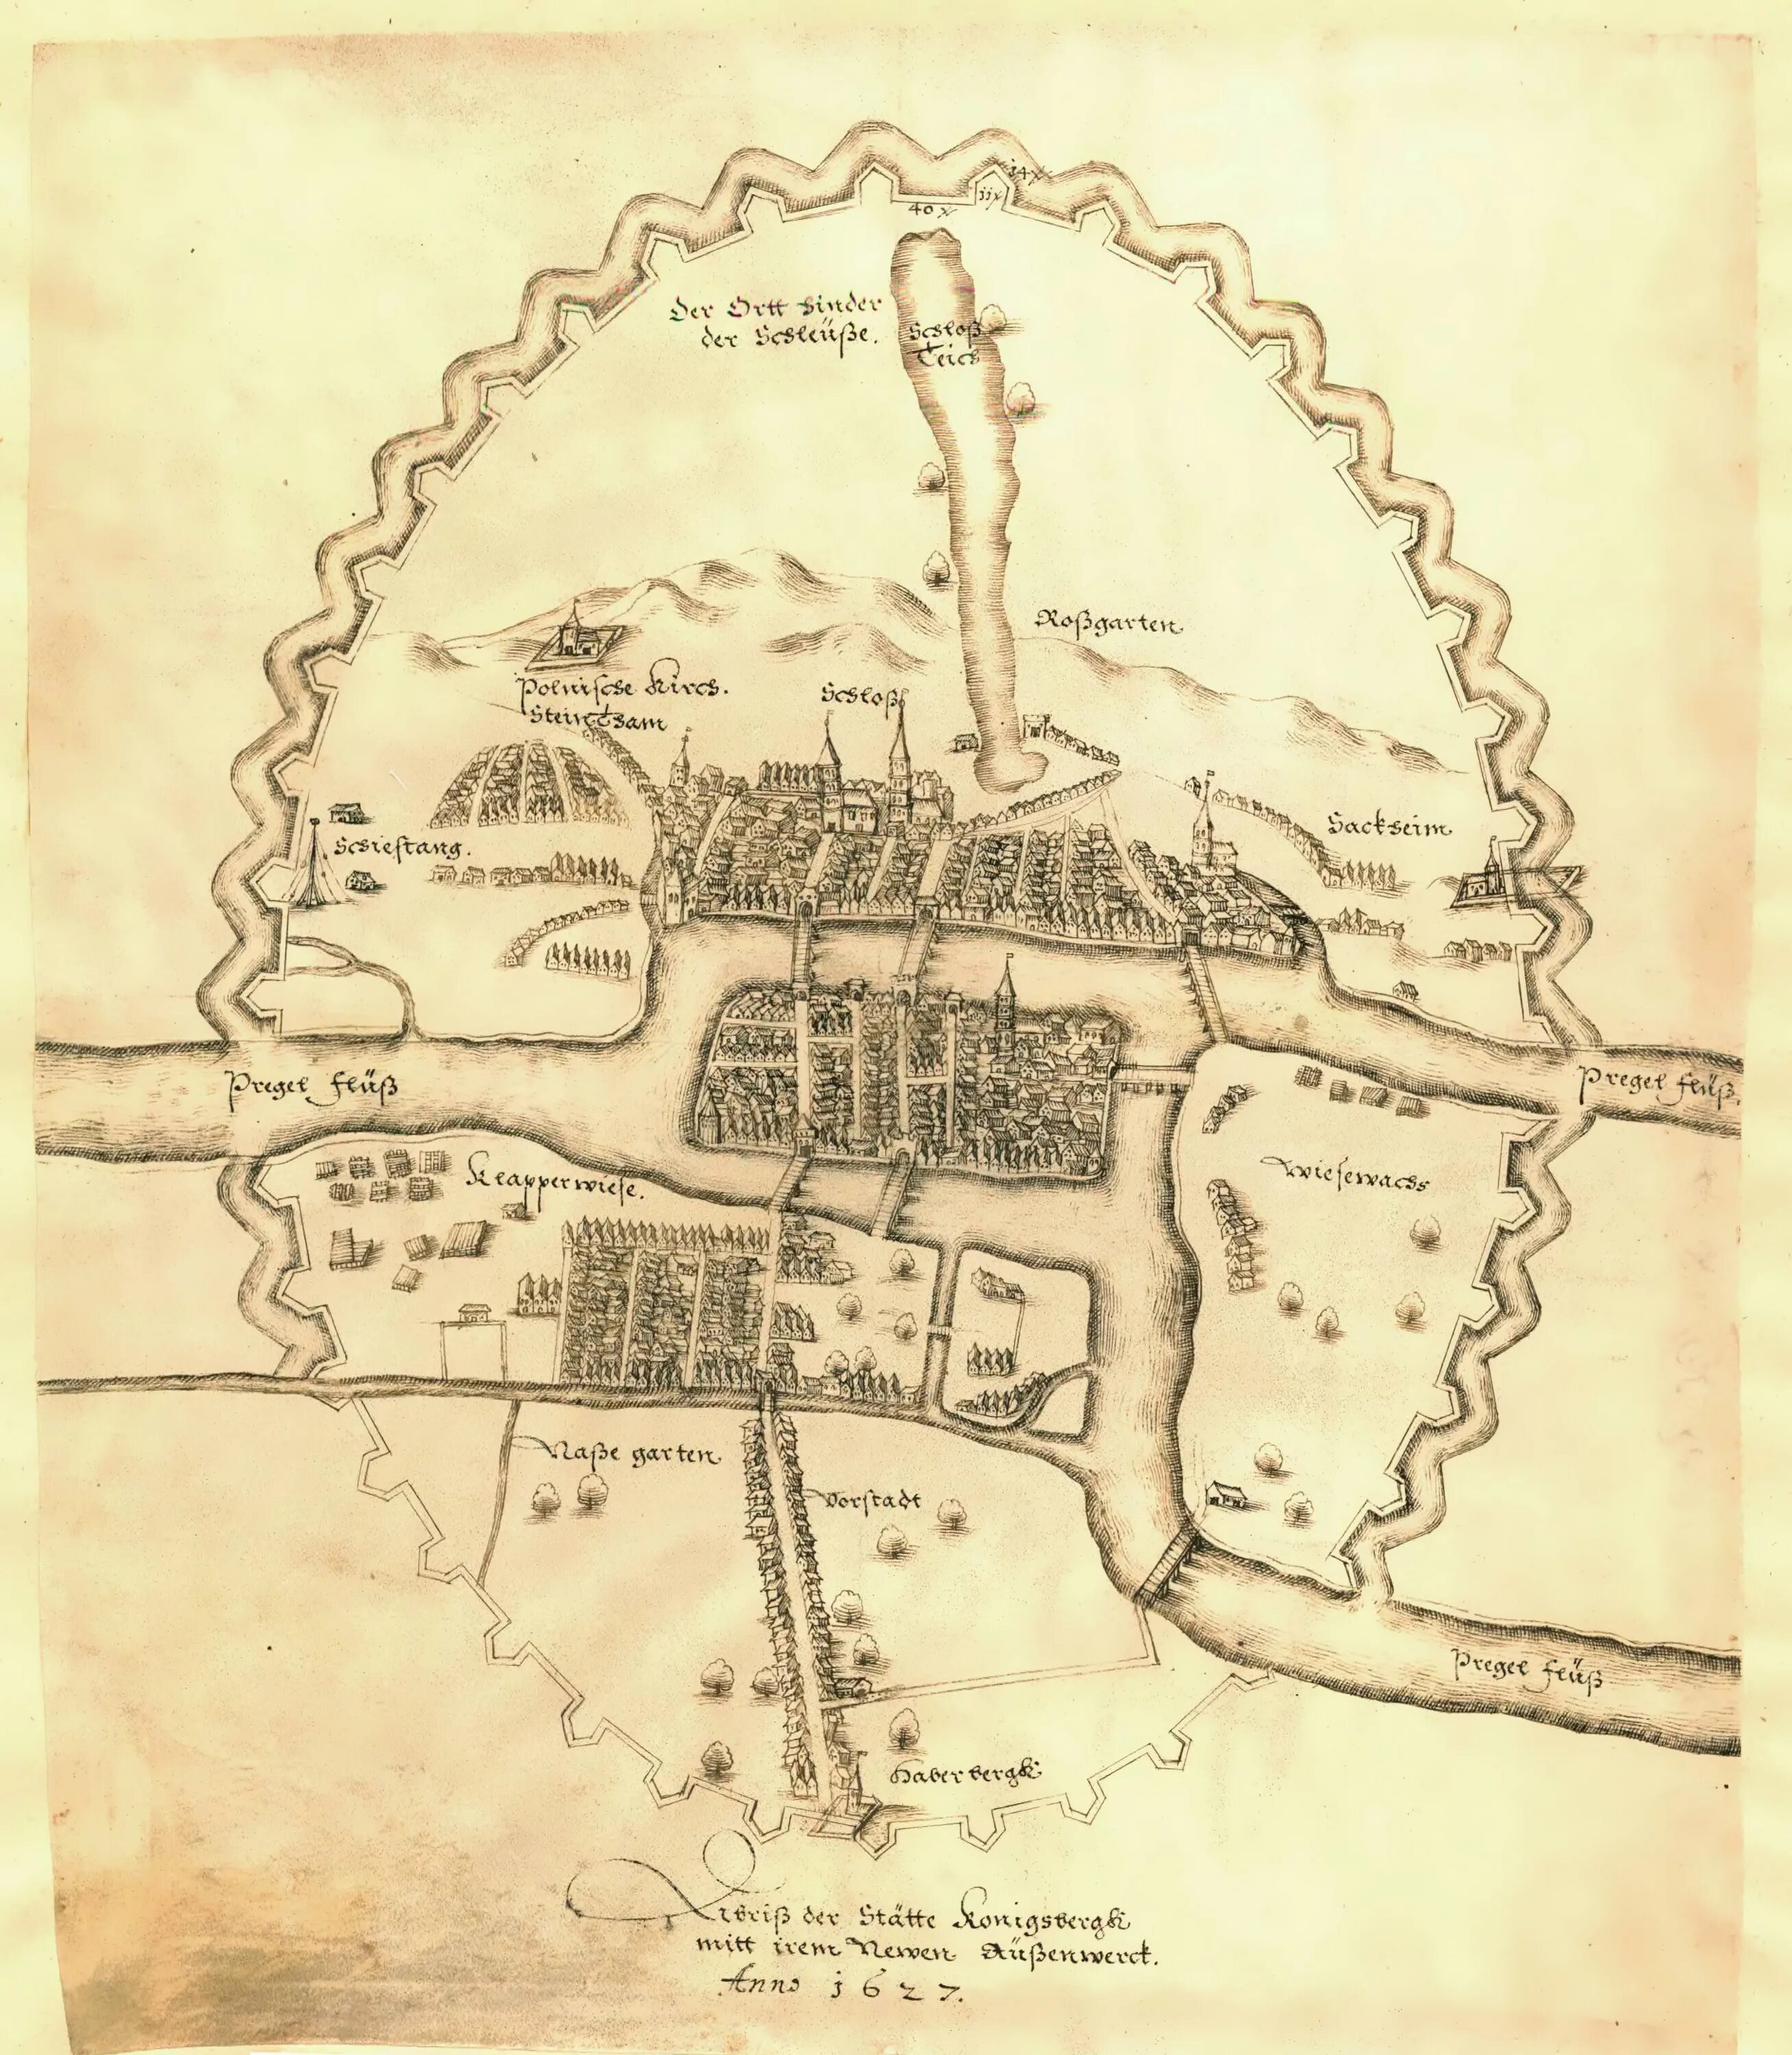 Кёнигсберг на карте 18 века. Карта Кенигсберга 16 века. Кенигсберг план города старый. Карта древнего Кенигсберга. Подпишите на карте город кенигсберг